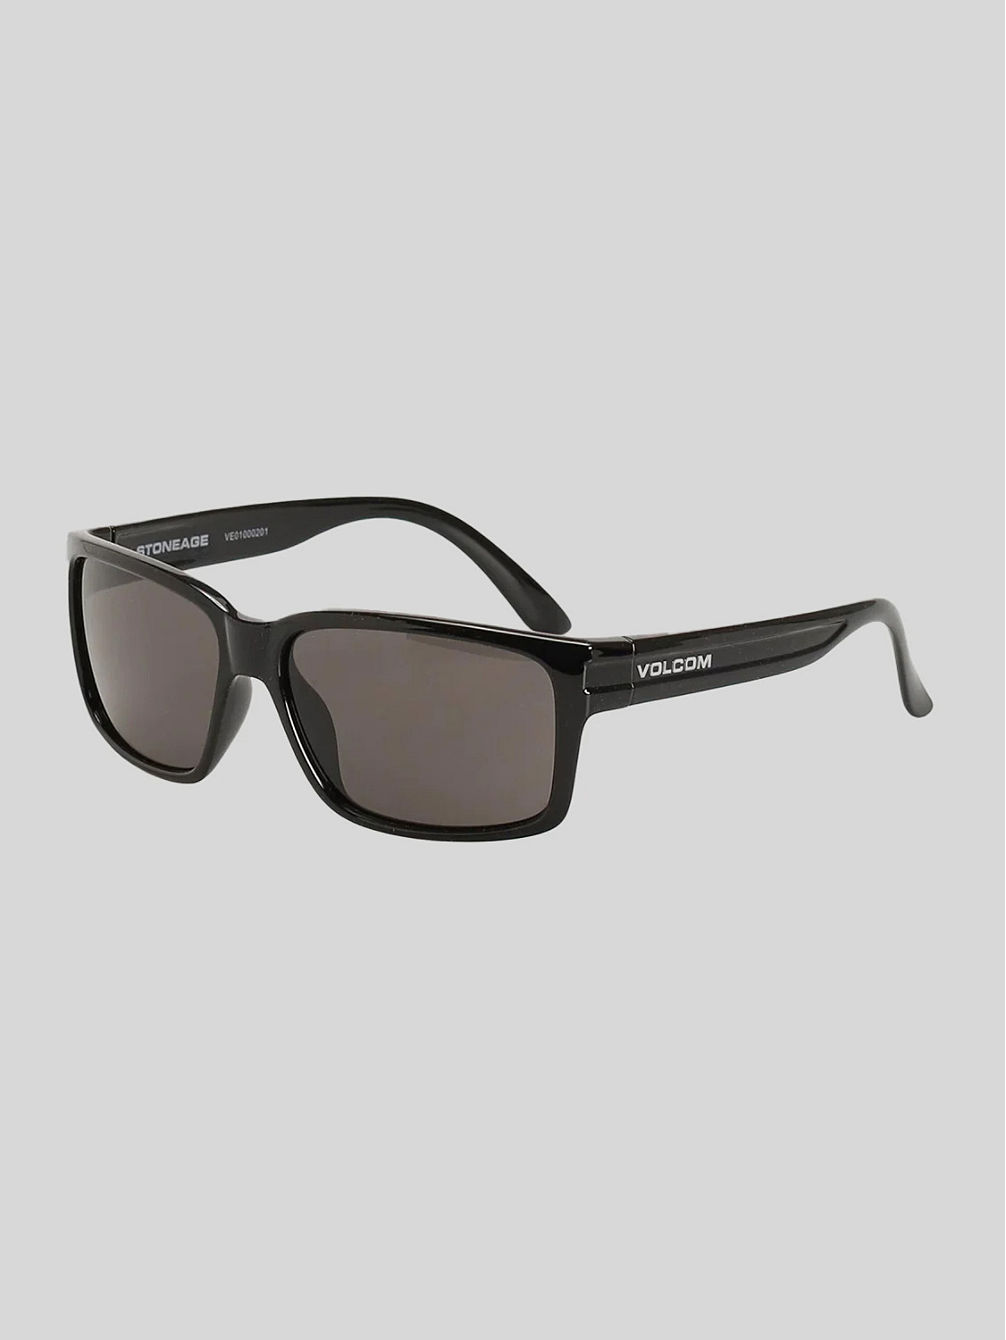 Stoneage Gloss Black Sunglasses